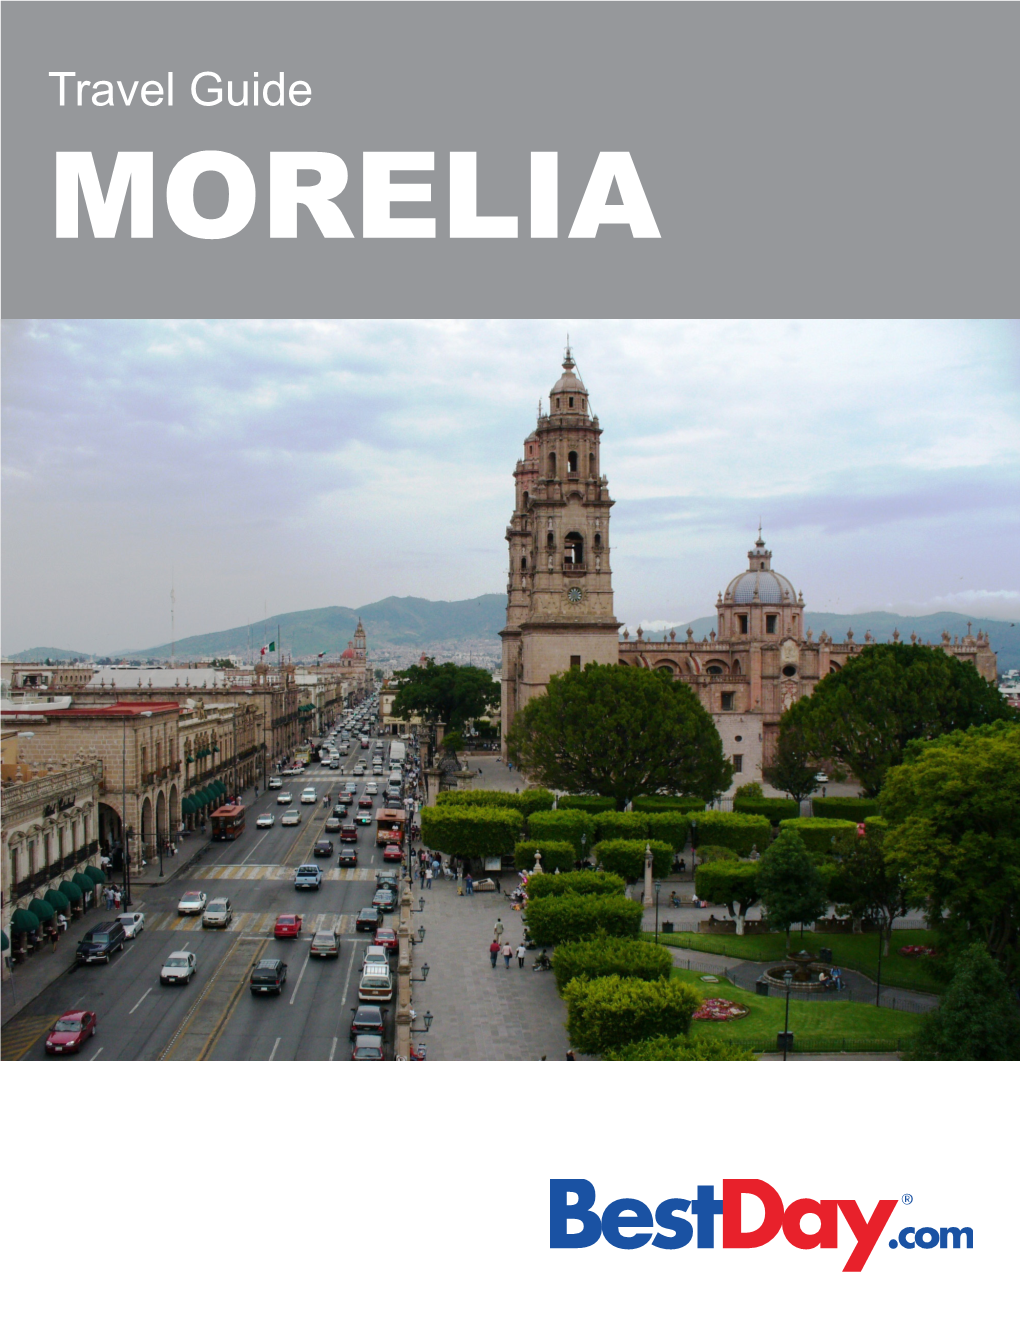 Travel Guide MORELIA Contents